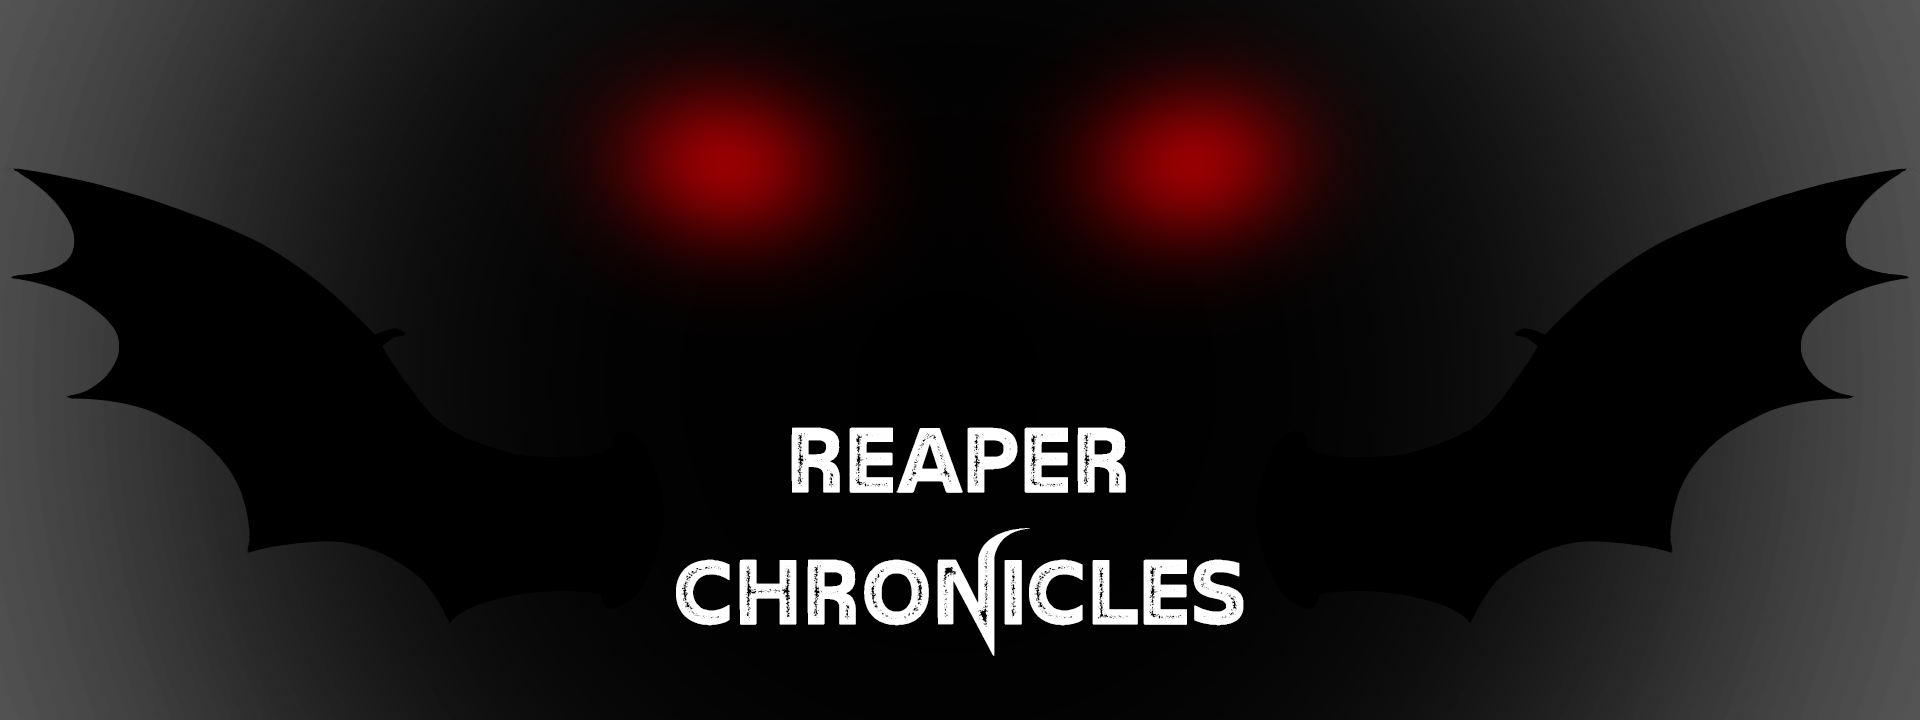 Reaper Chronicles